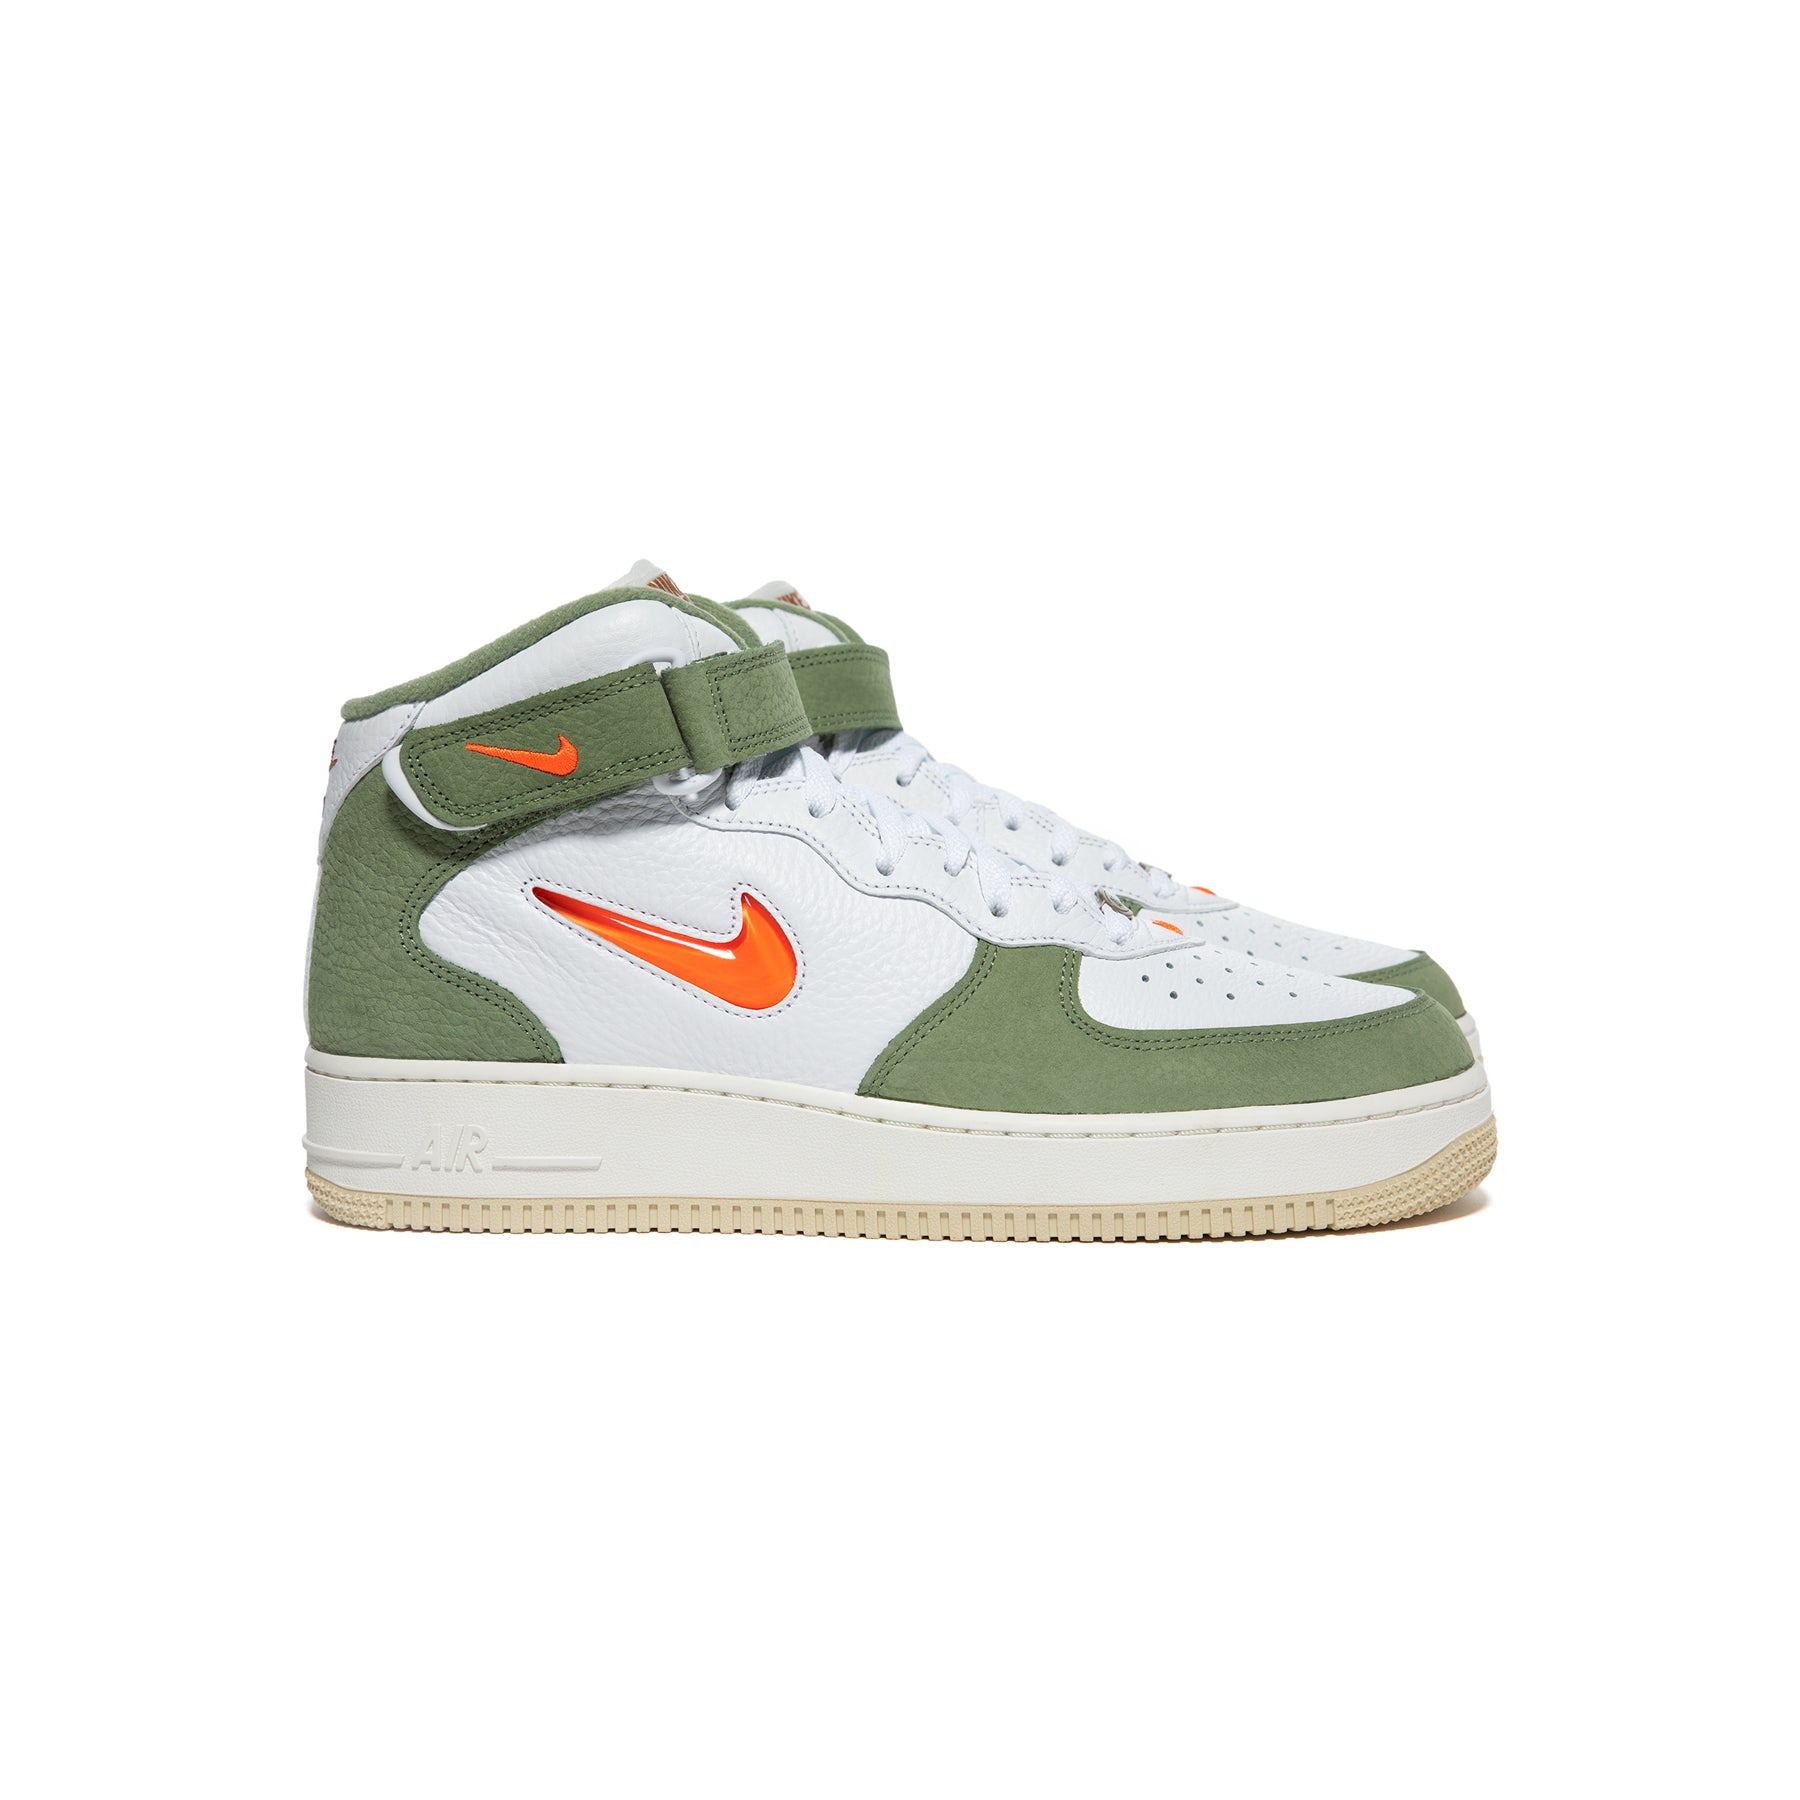 Nike Air Force 1 Mid QS 14 / White/Total Orange-Oil Green